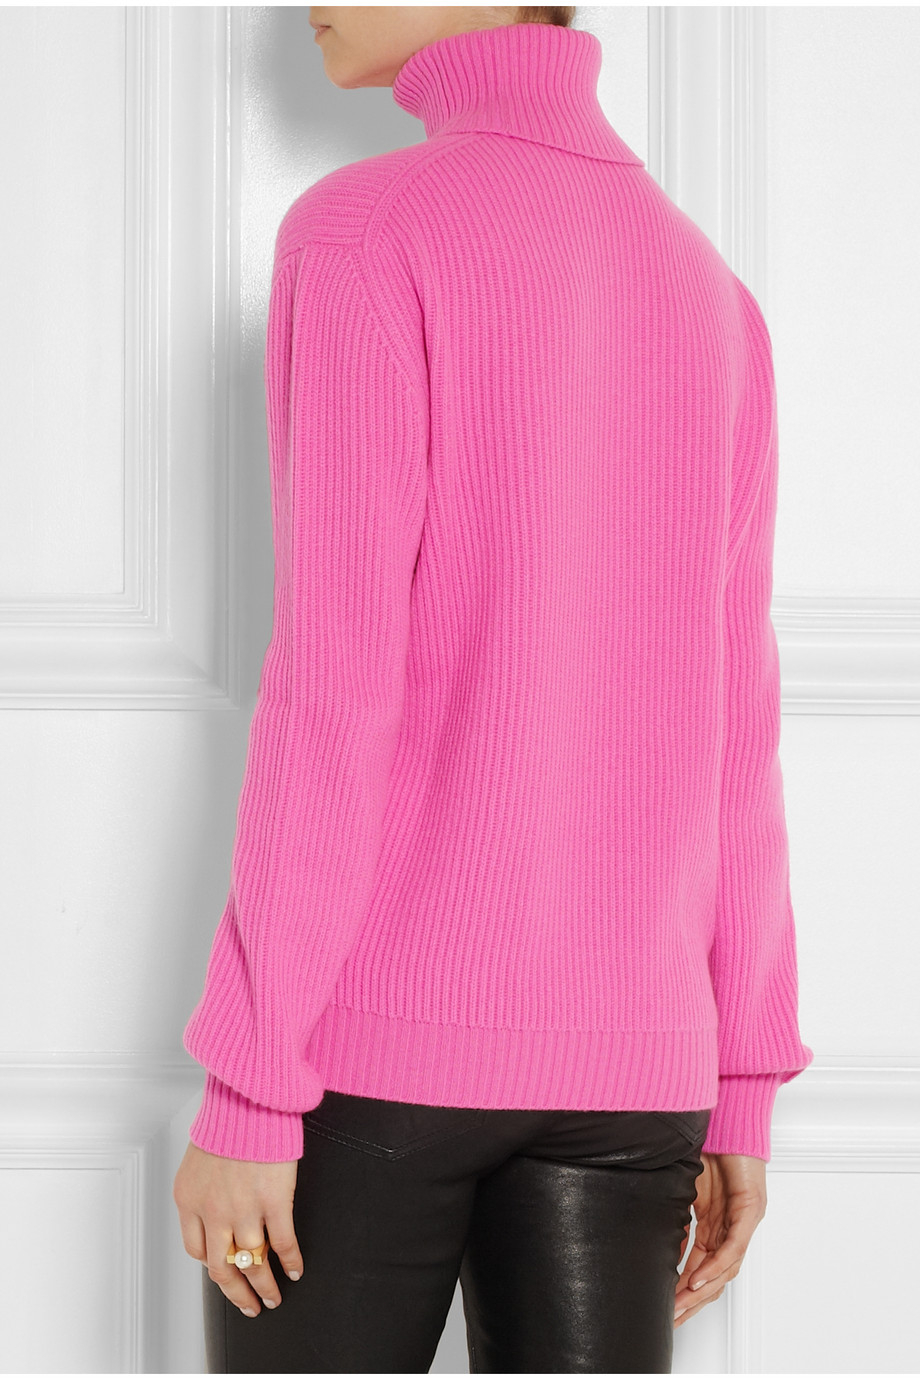 Bottega Veneta Ribbed Cashmere Turtleneck Sweater in Pink - Lyst